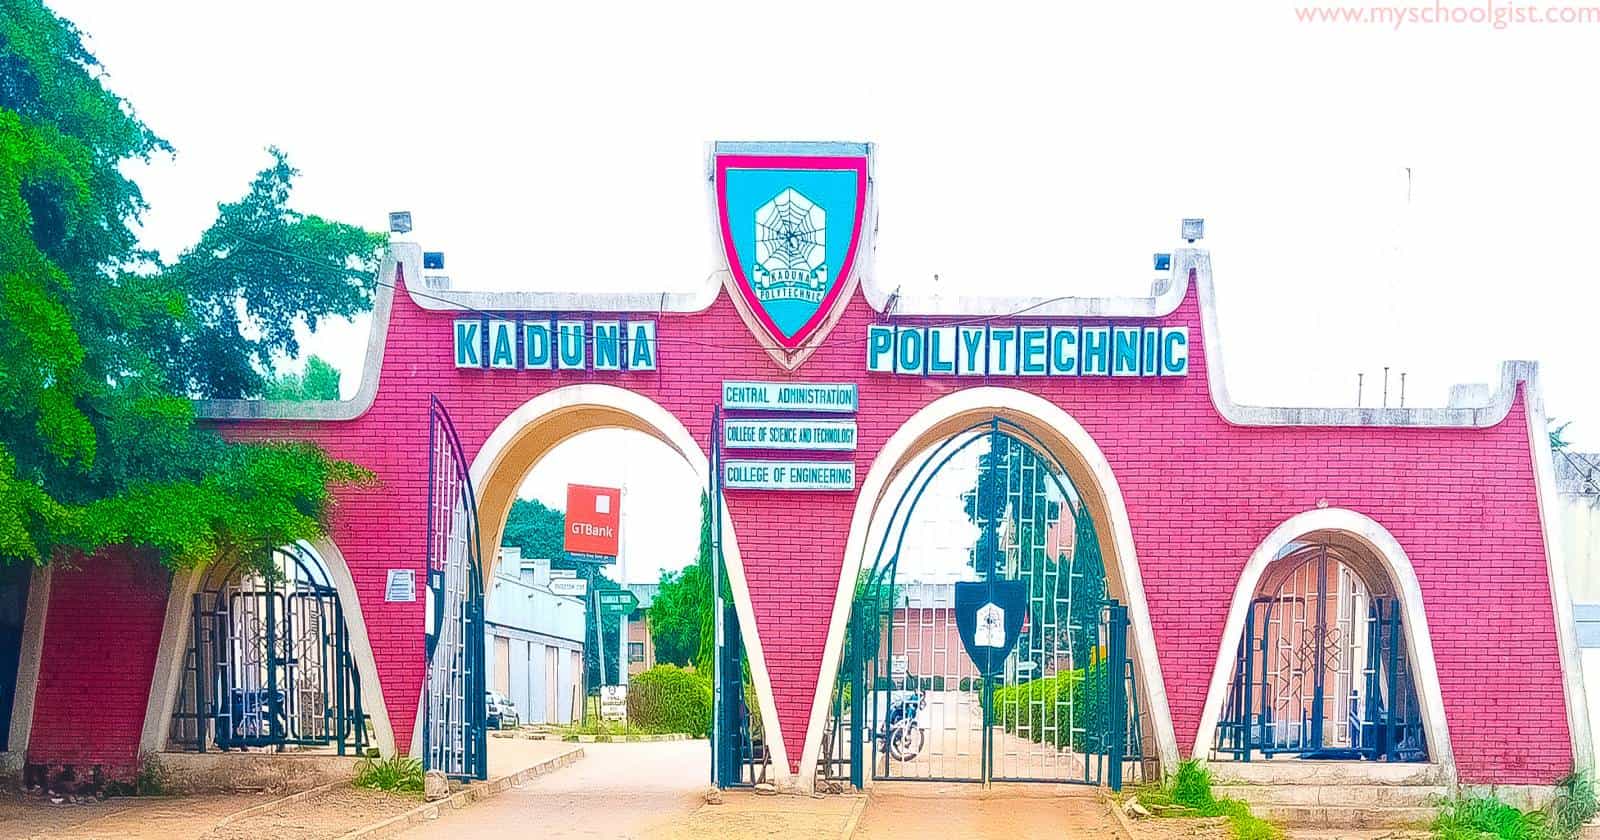 Kaduna Polytechnic (KADPOLY) End of The Year Break Notice